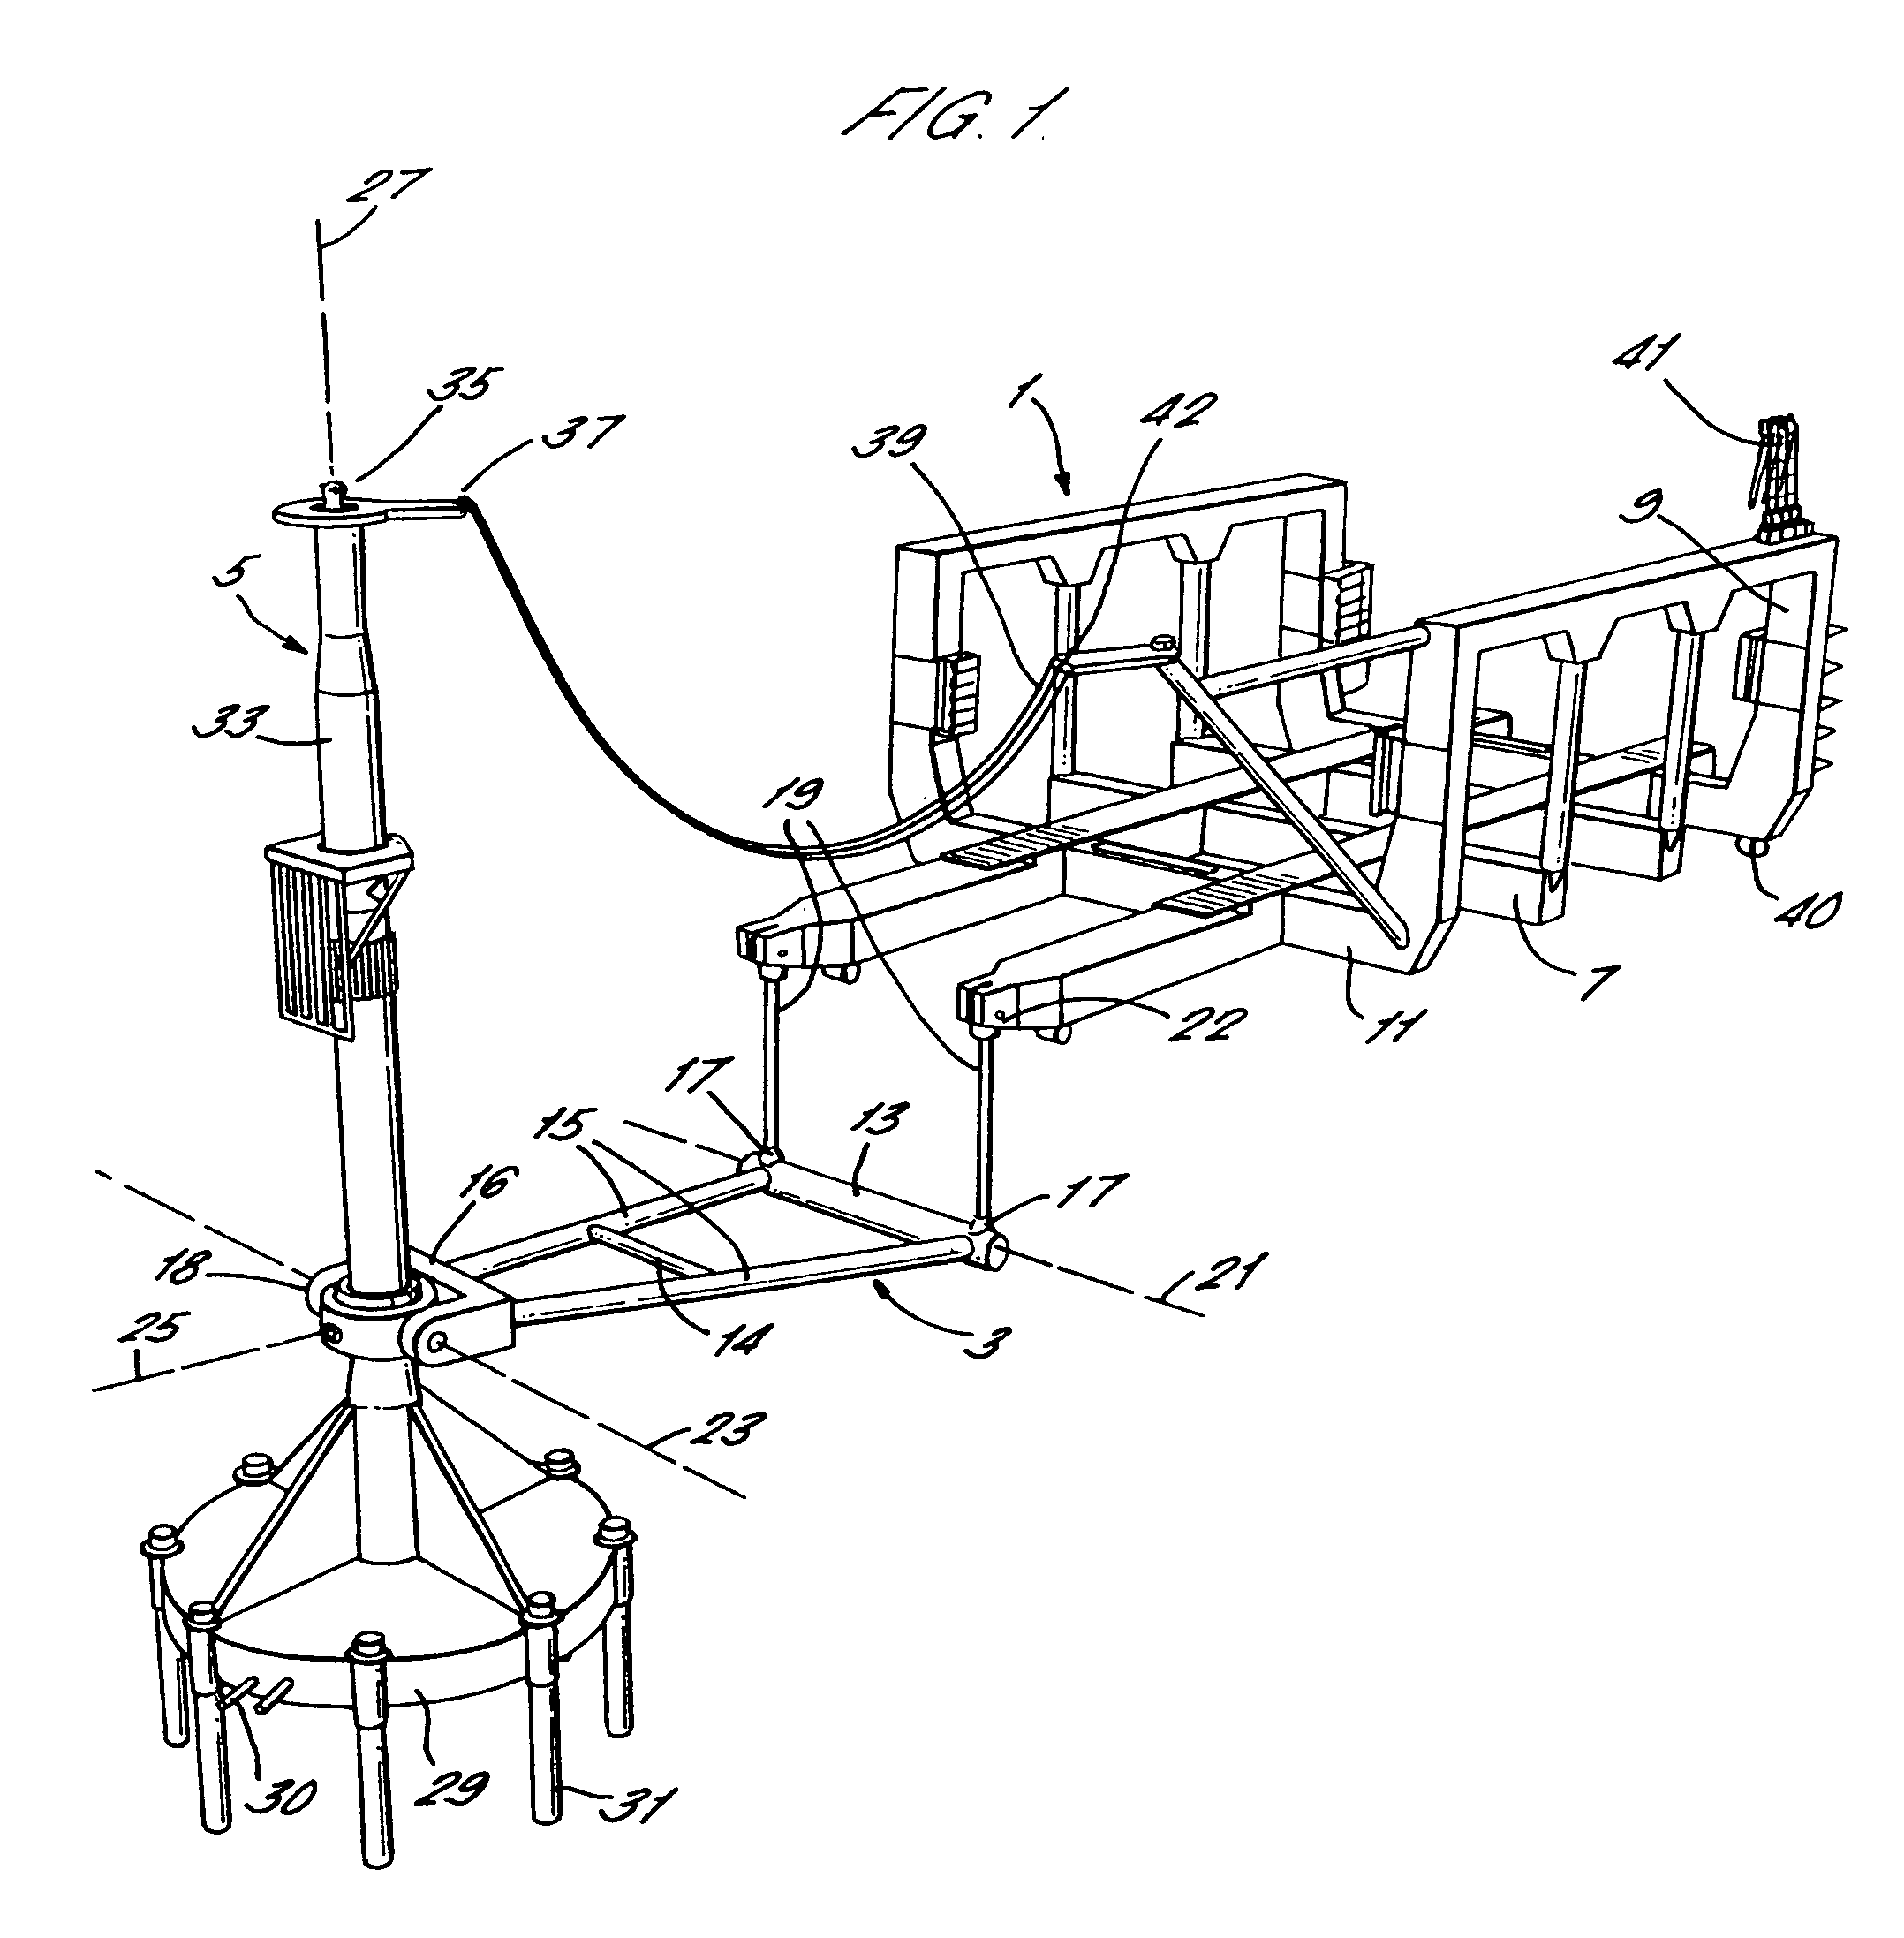 Mooring apparatus